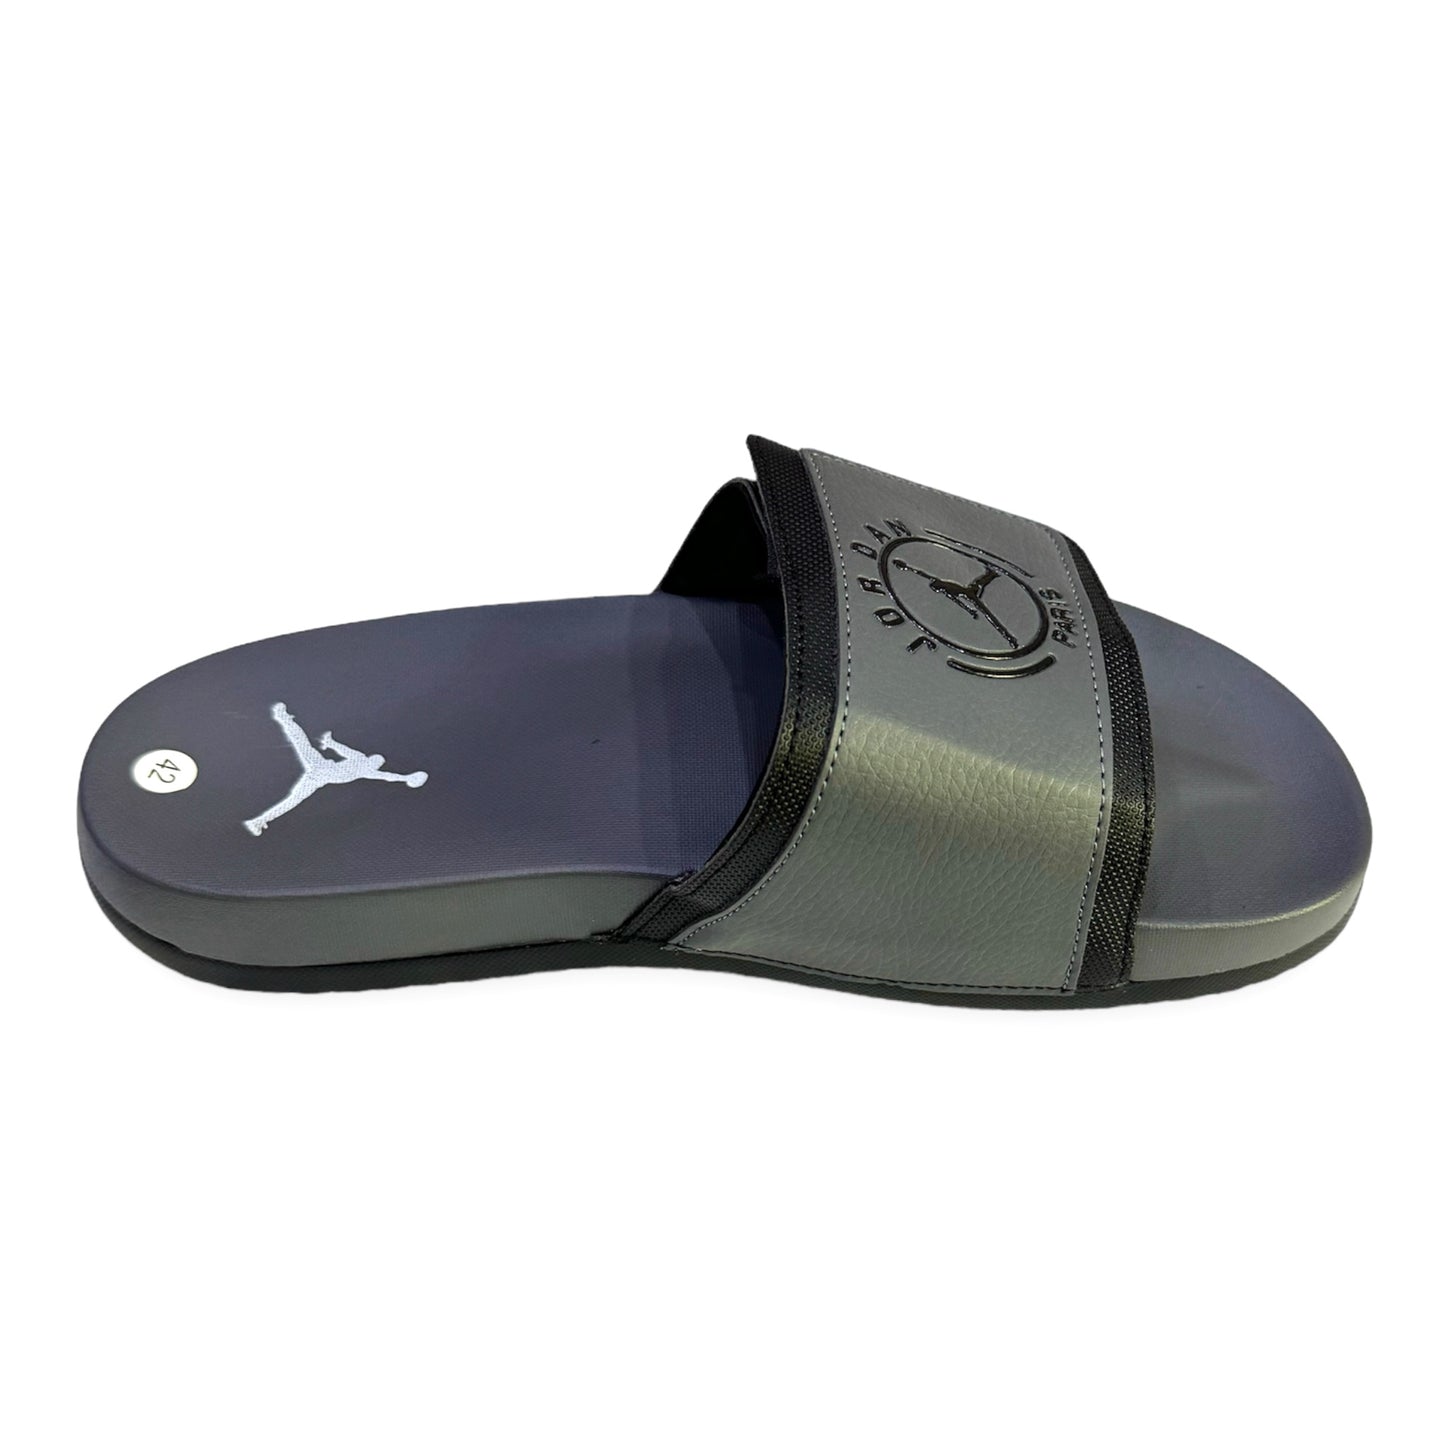 J-O-R-D-A-N Imported Premium Foambed Grey Slides